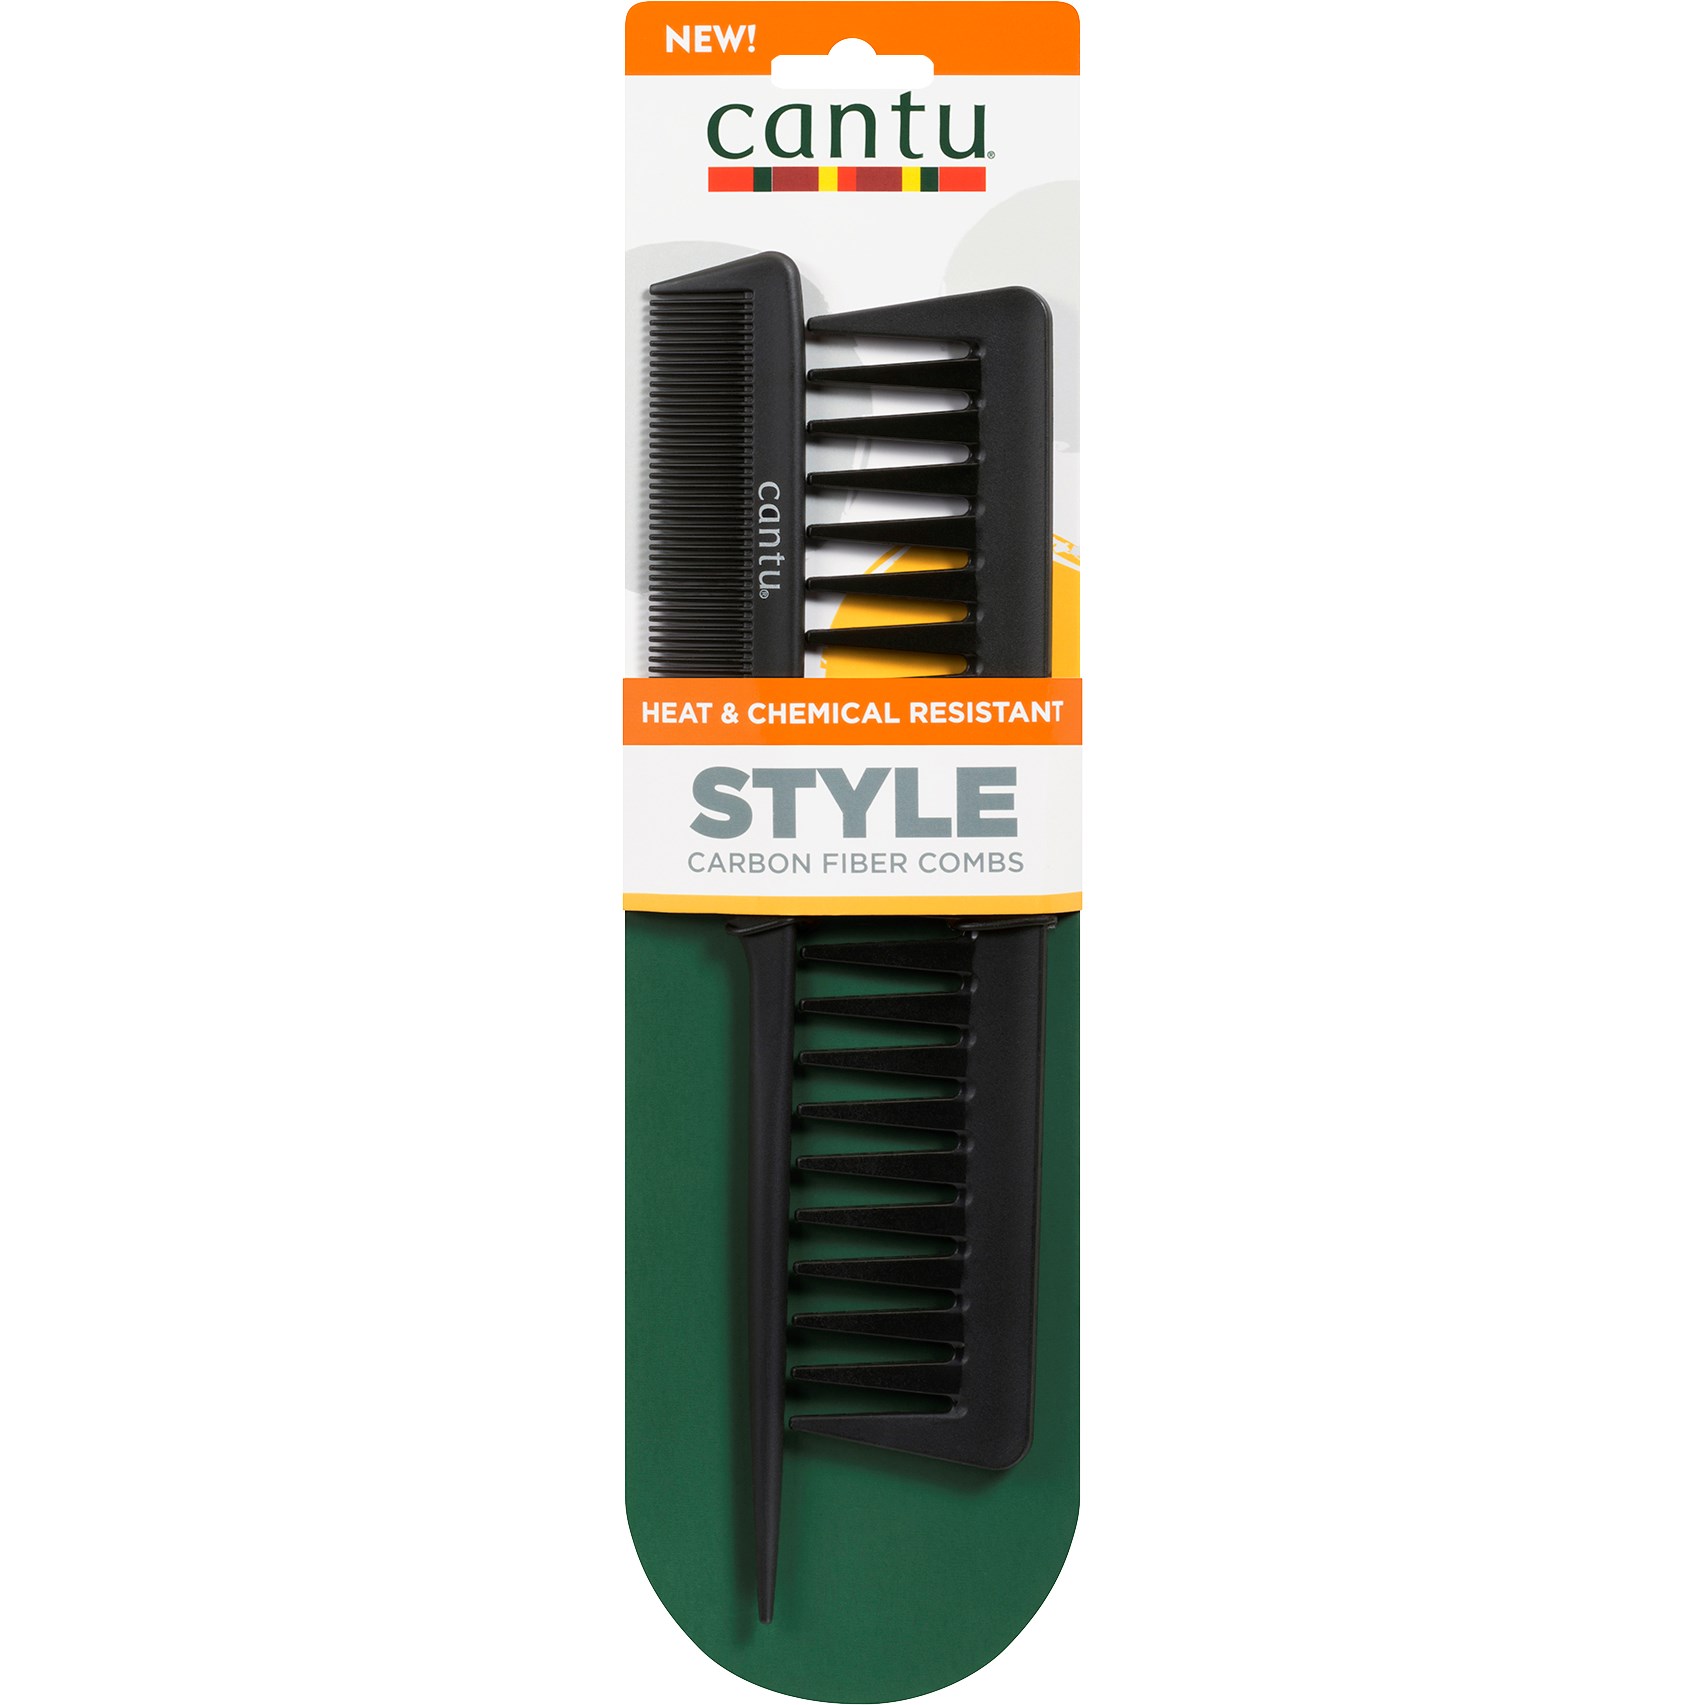 Cantu   Style Carbon Fiber Combs